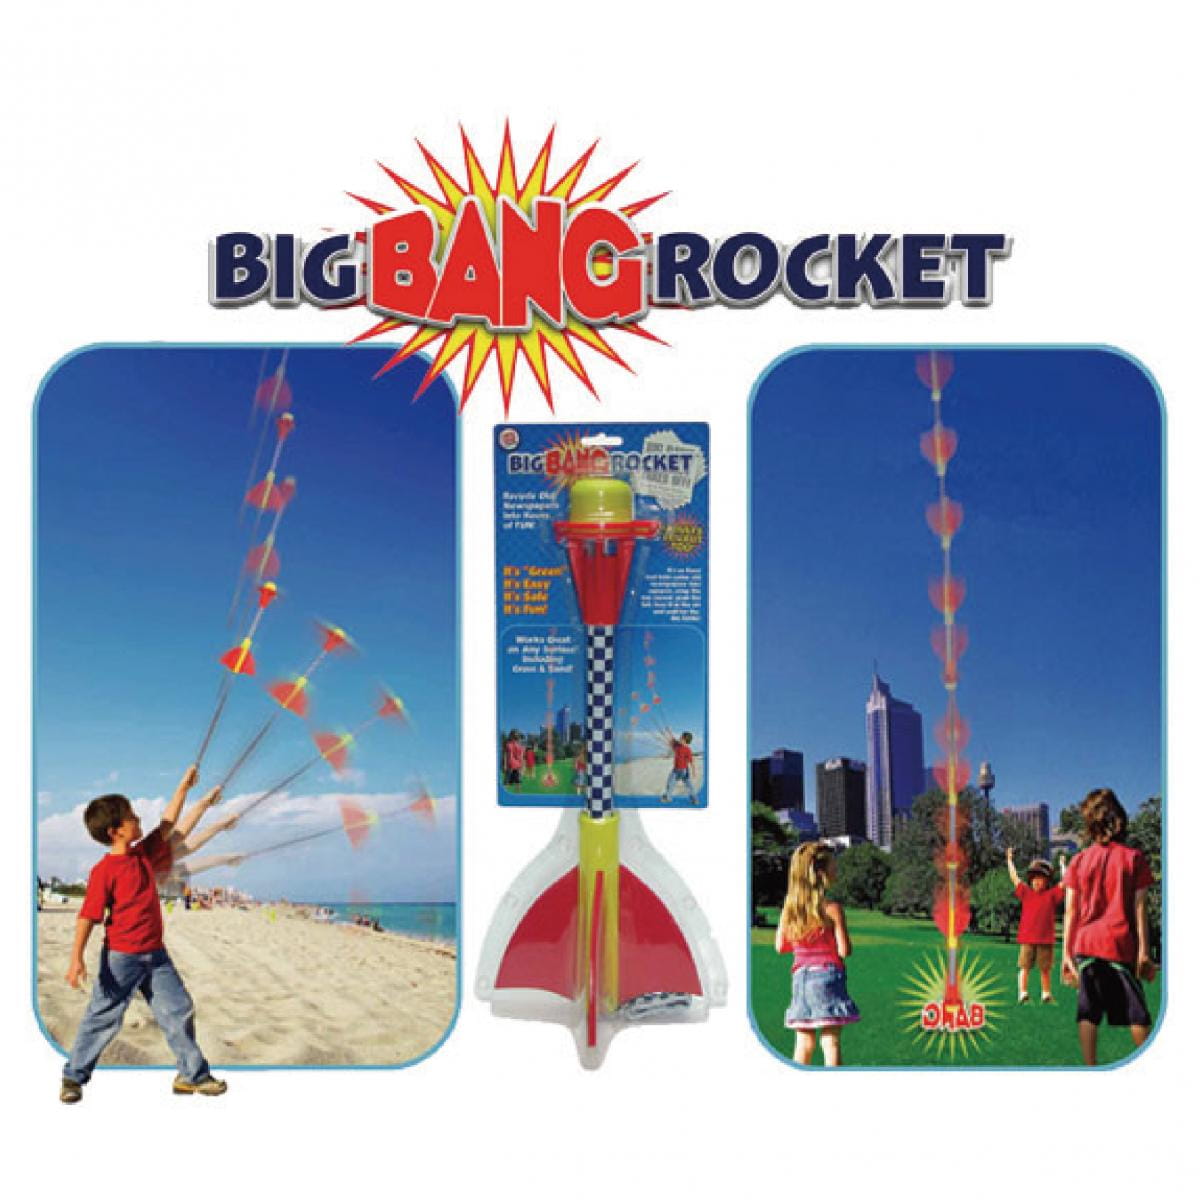 【現貨】Big bang rocket 火箭炮  趣味玩具 4